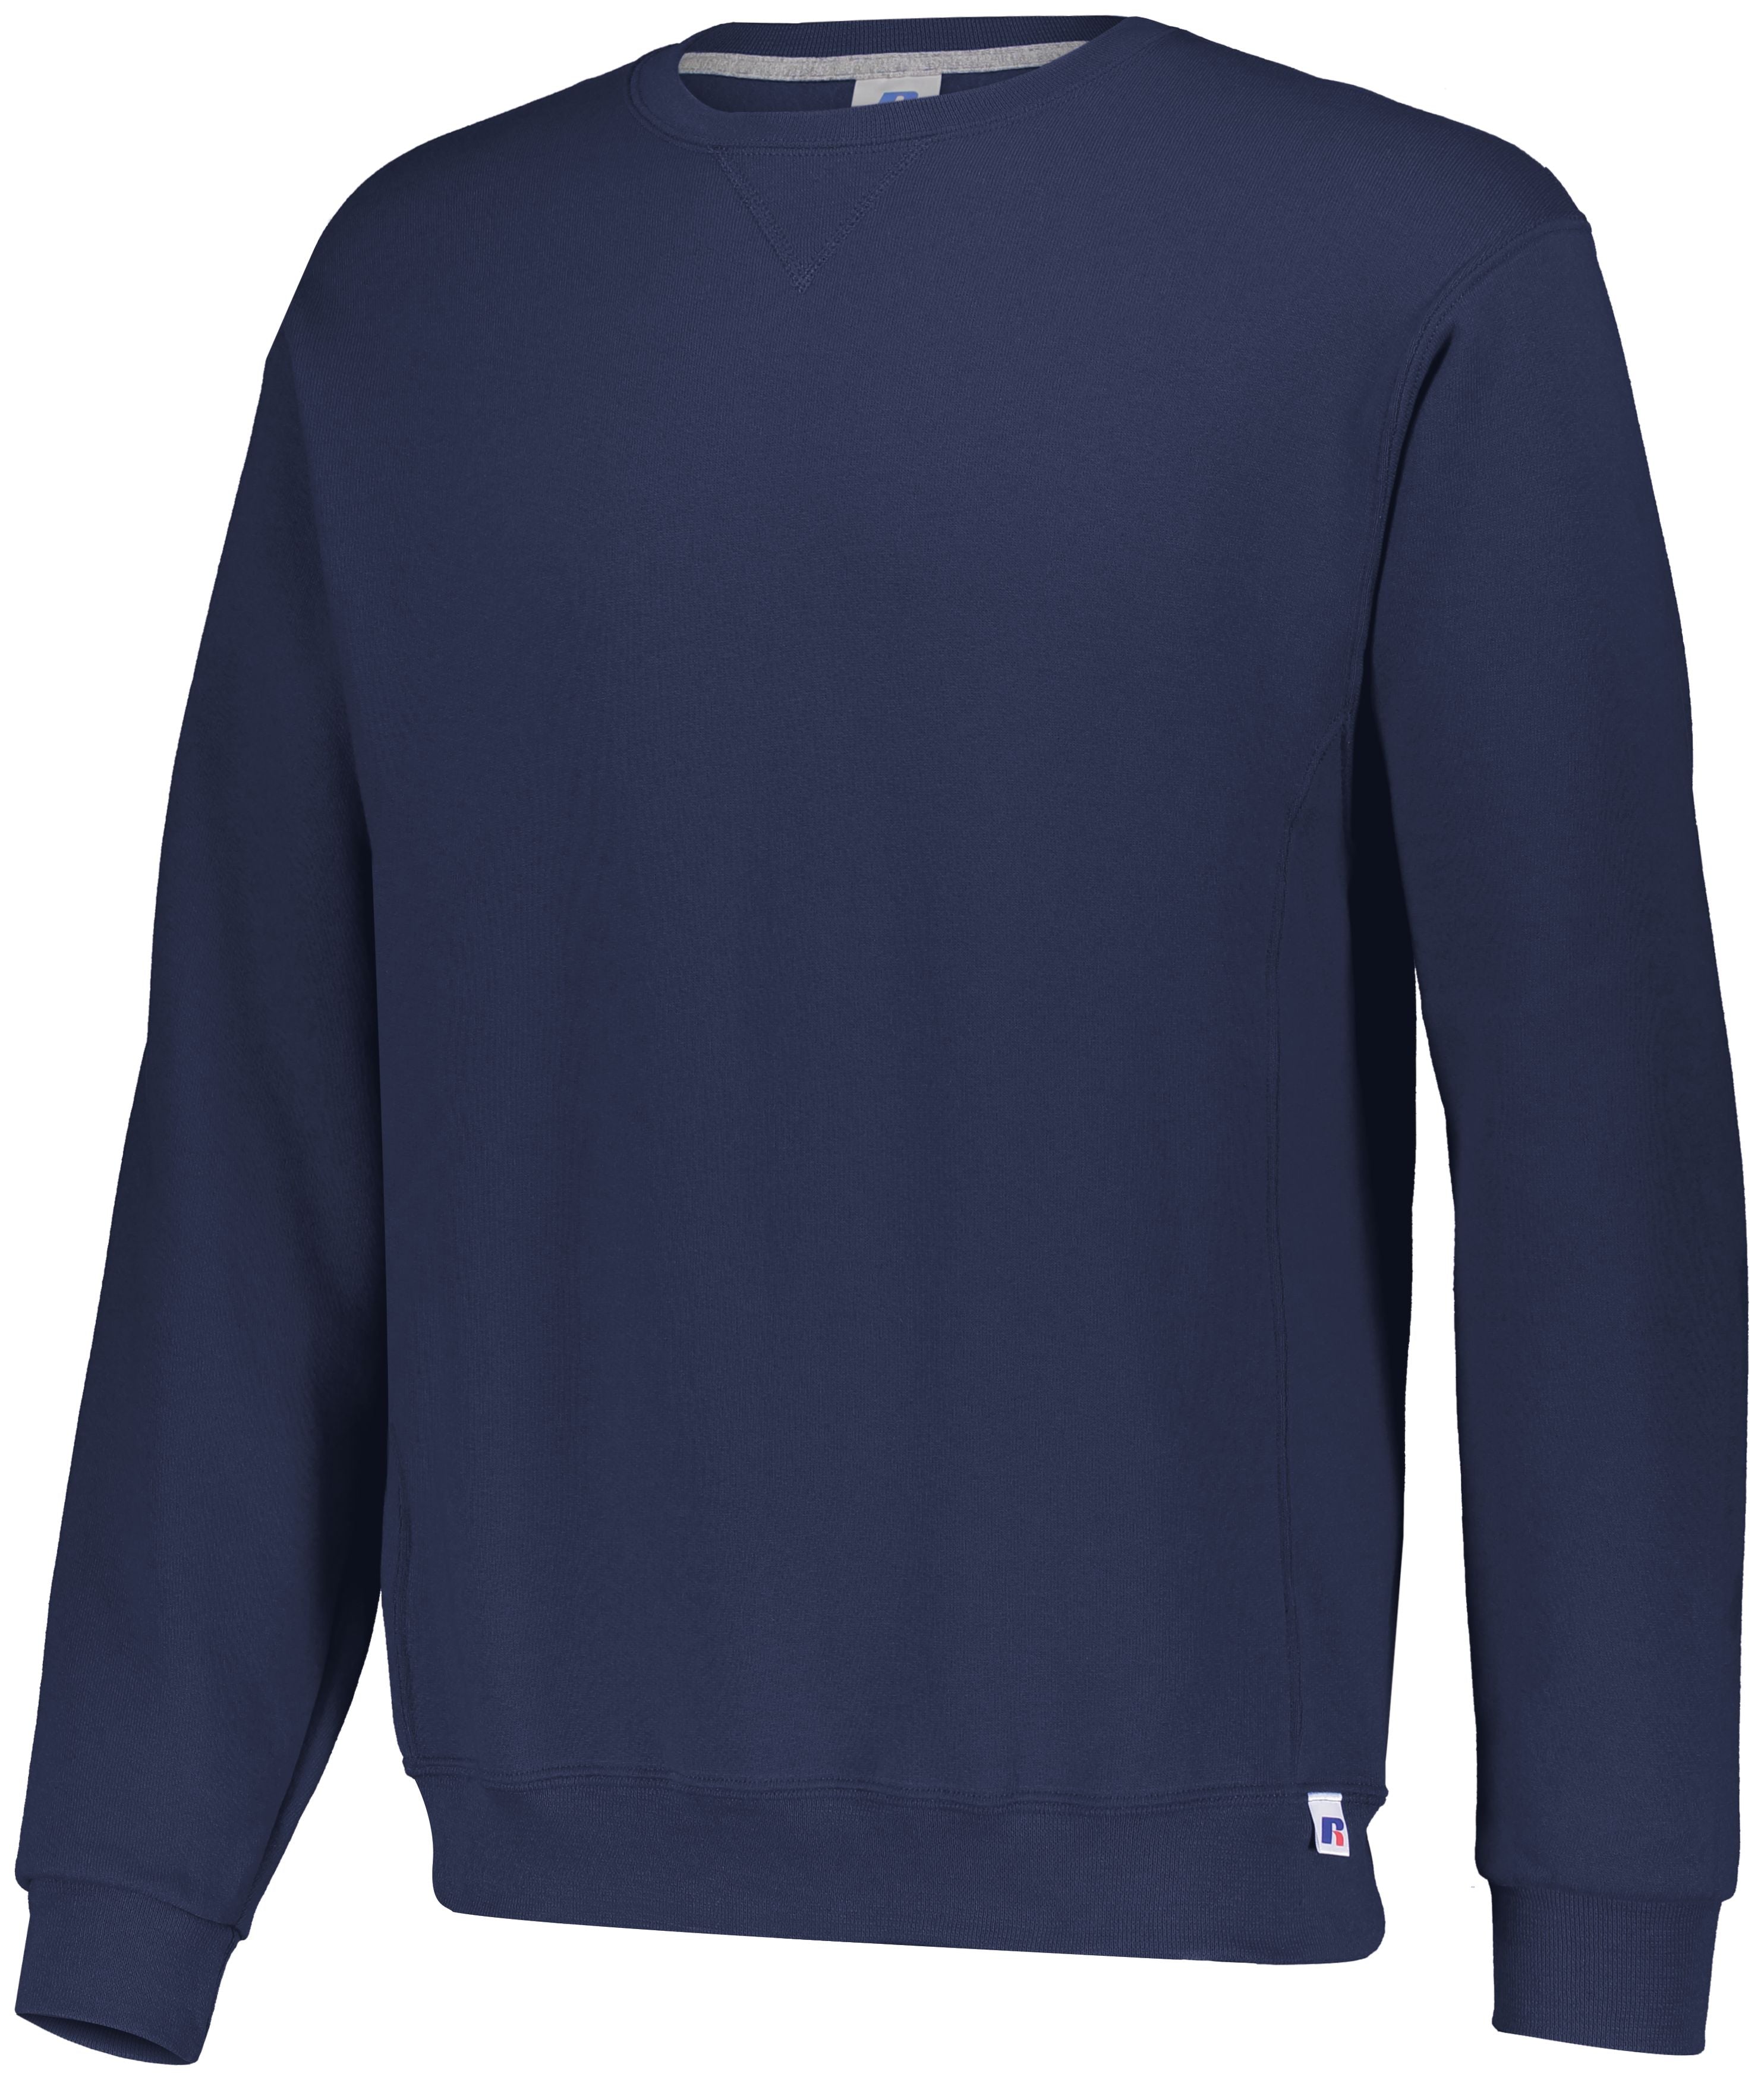 Russell Athletic Dri-Power  Fleece Crew Sweatshirt in J.Navy  -Part of the Adult, Adult-Sweatshirt, Russell-Athletic-Products, Outerwear product lines at KanaleyCreations.com